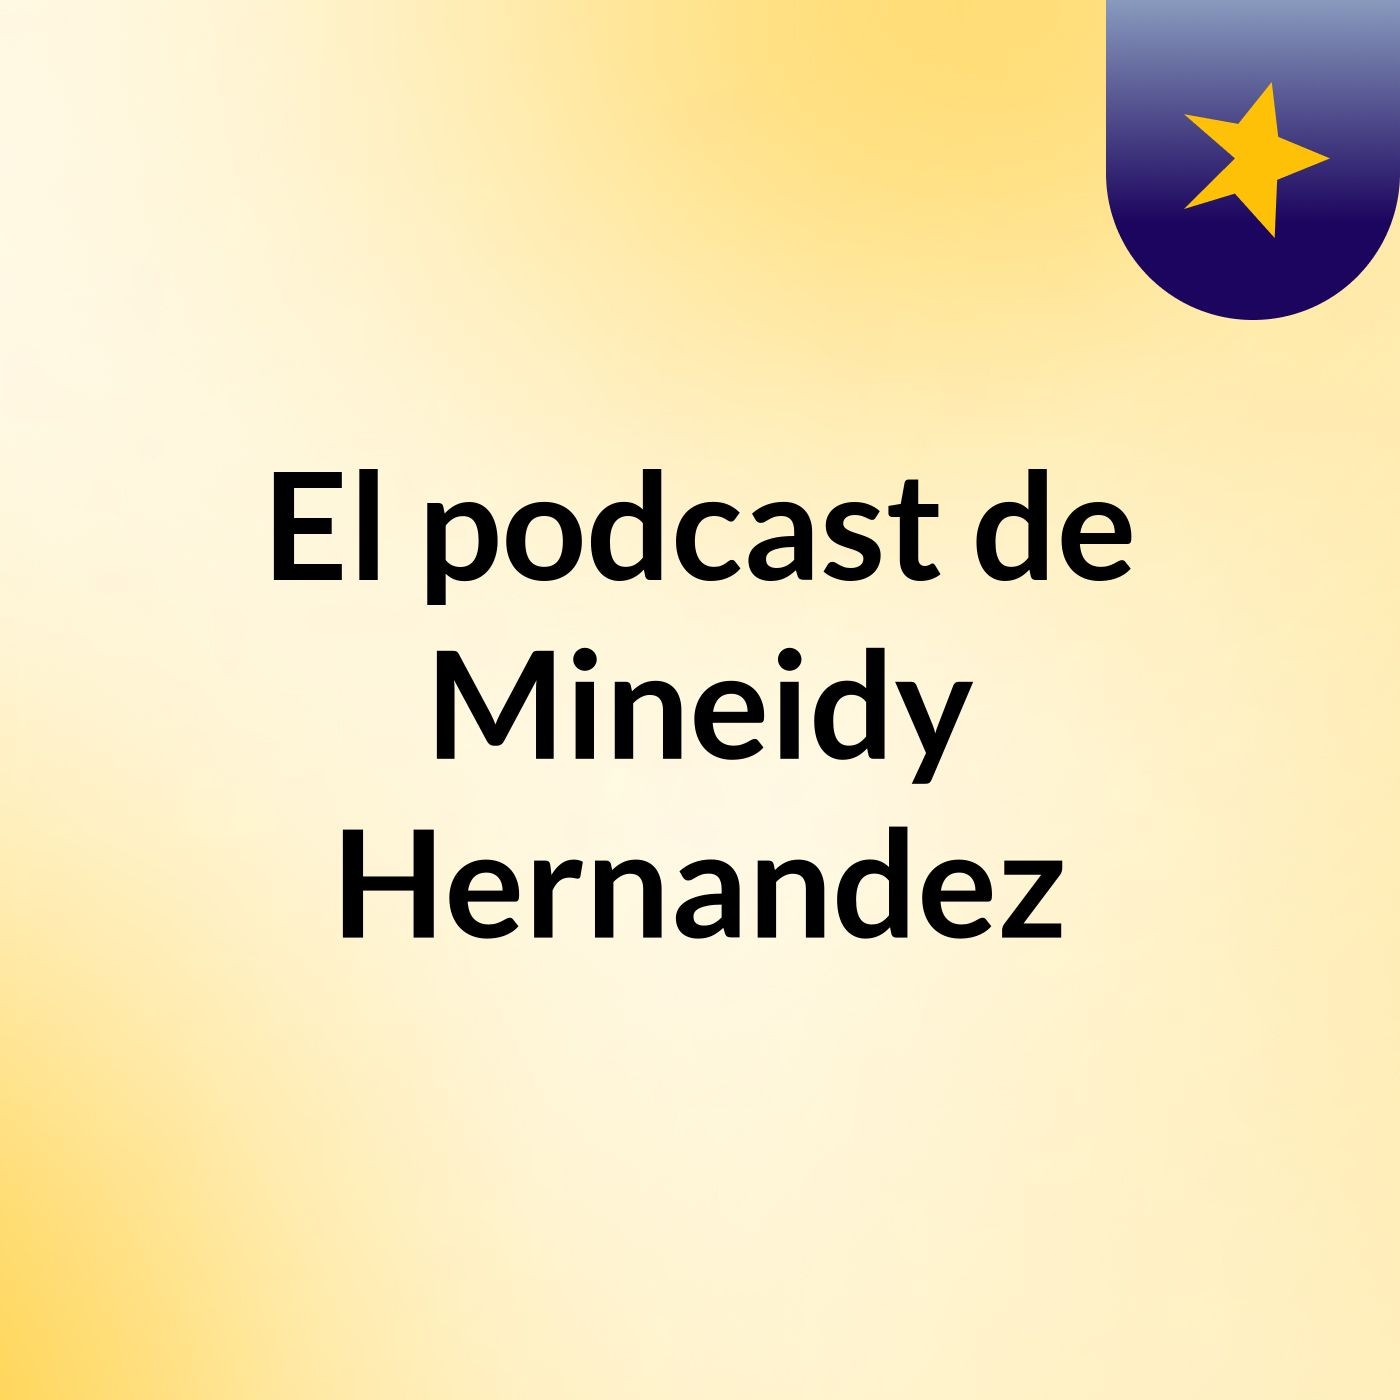 El podcast de Mineidy Hernandez